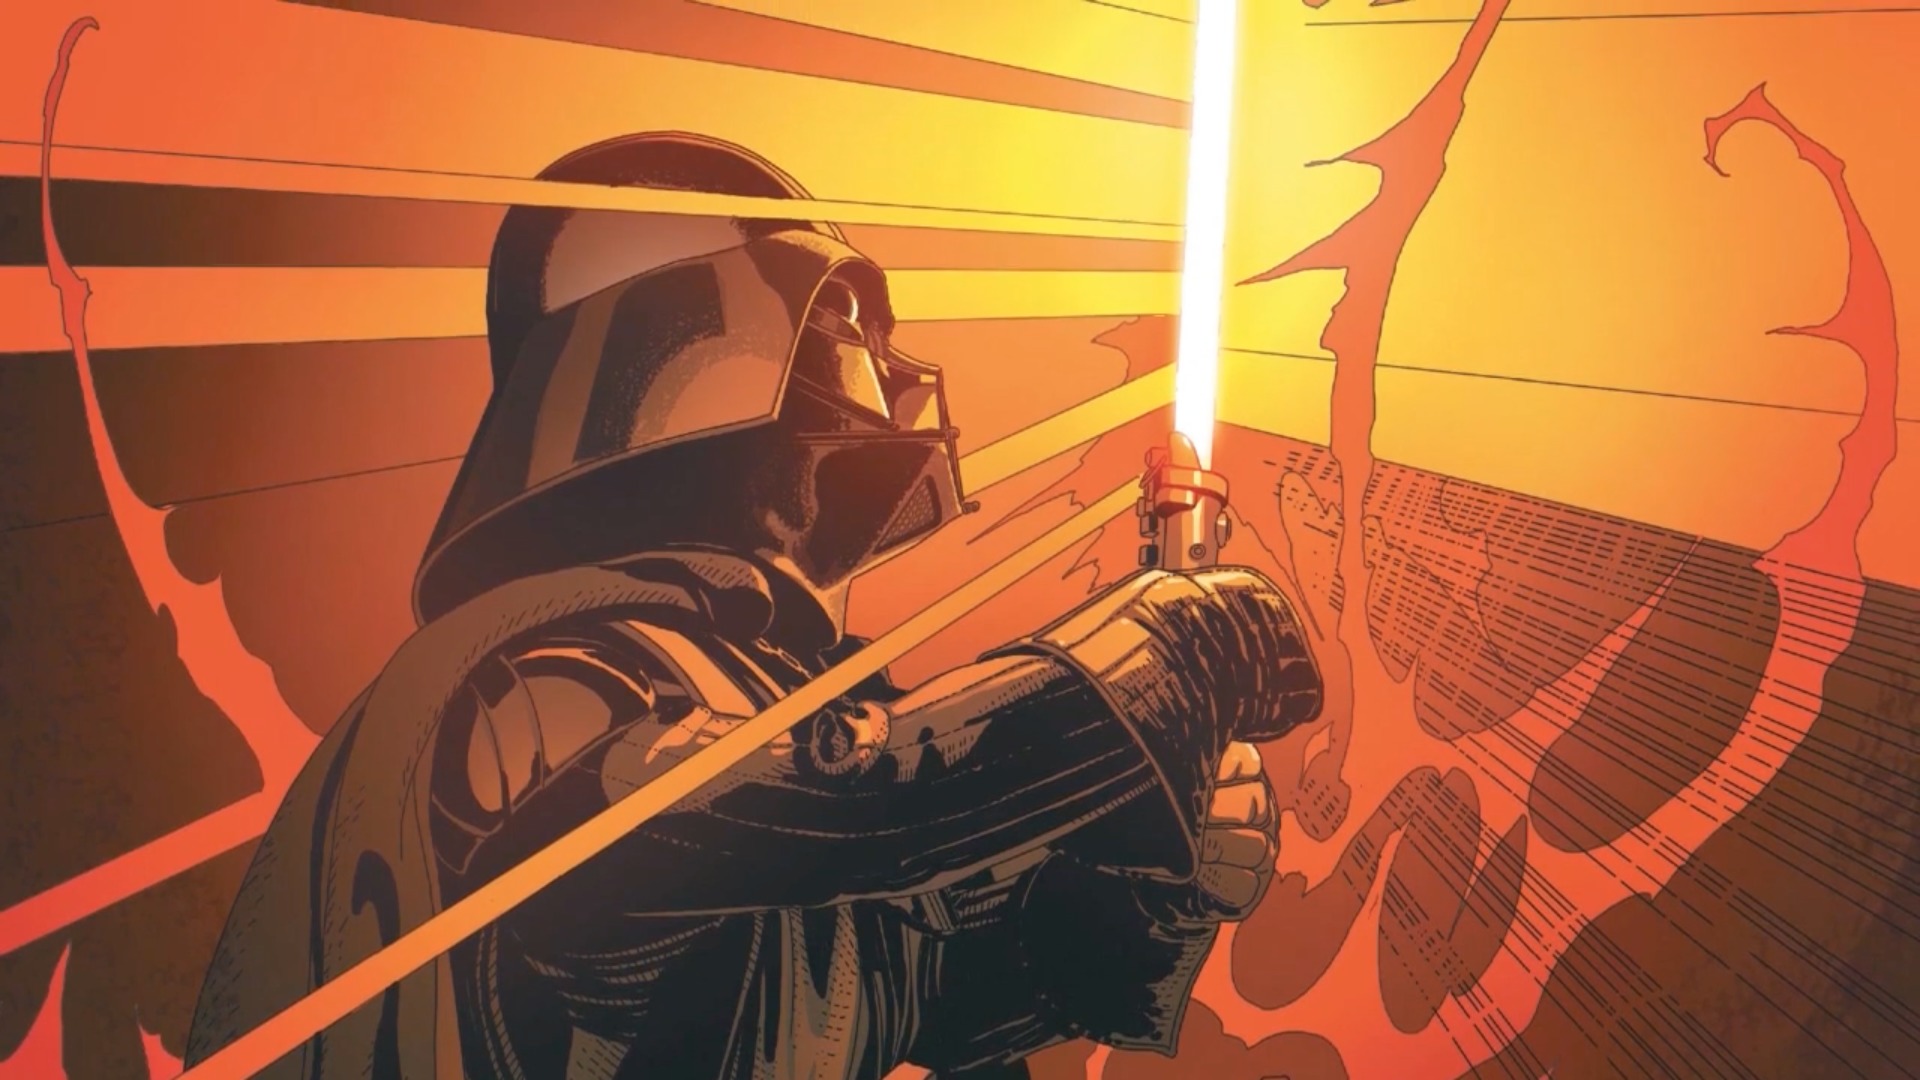 Comics Star Wars HD Wallpaper | Background Image